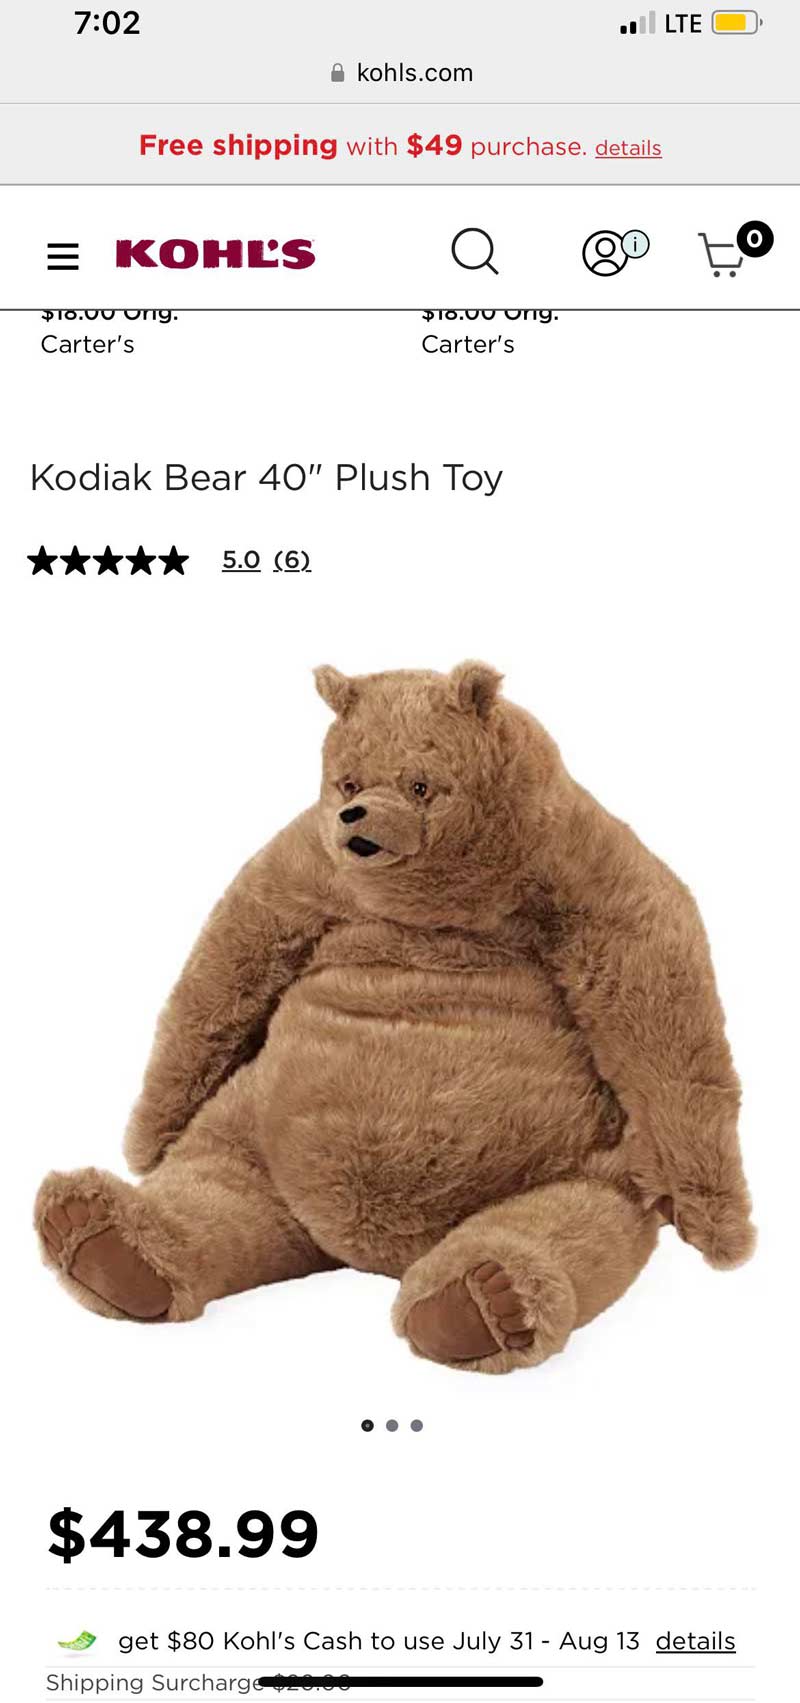 A teddy bear to haunt your dreams